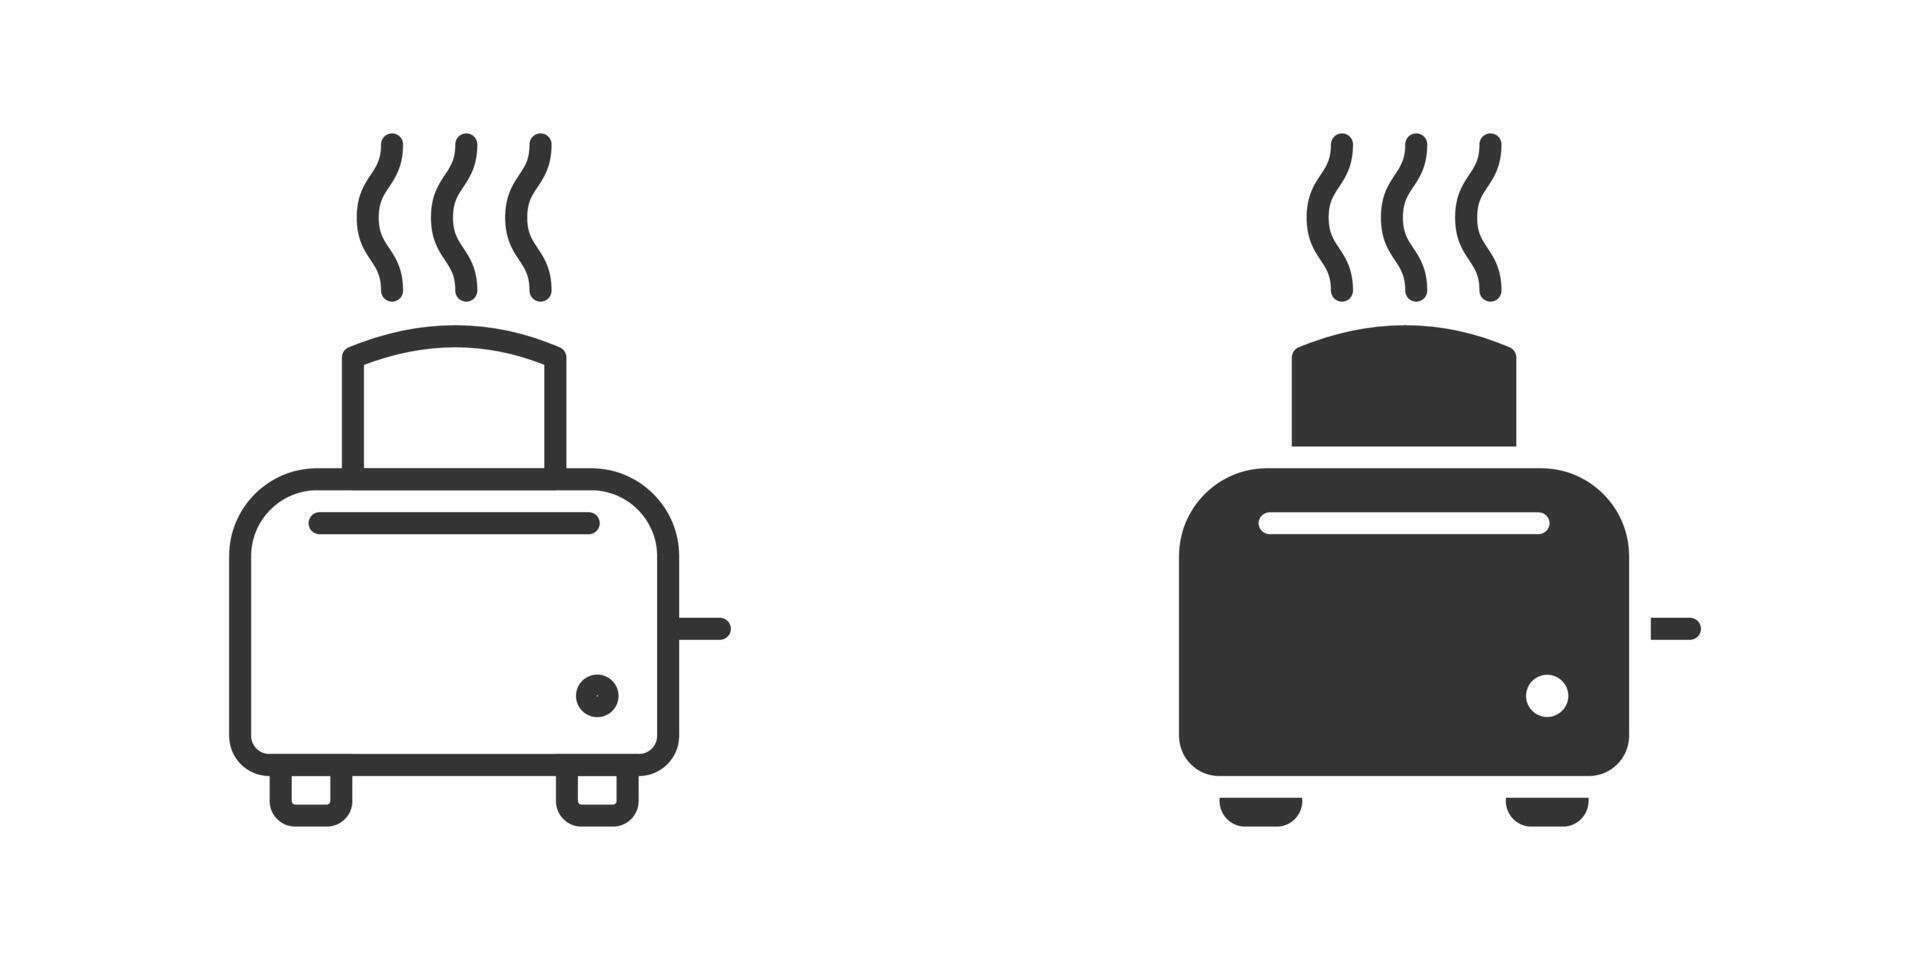 Toaster icon. Simple design. Vector illustration.